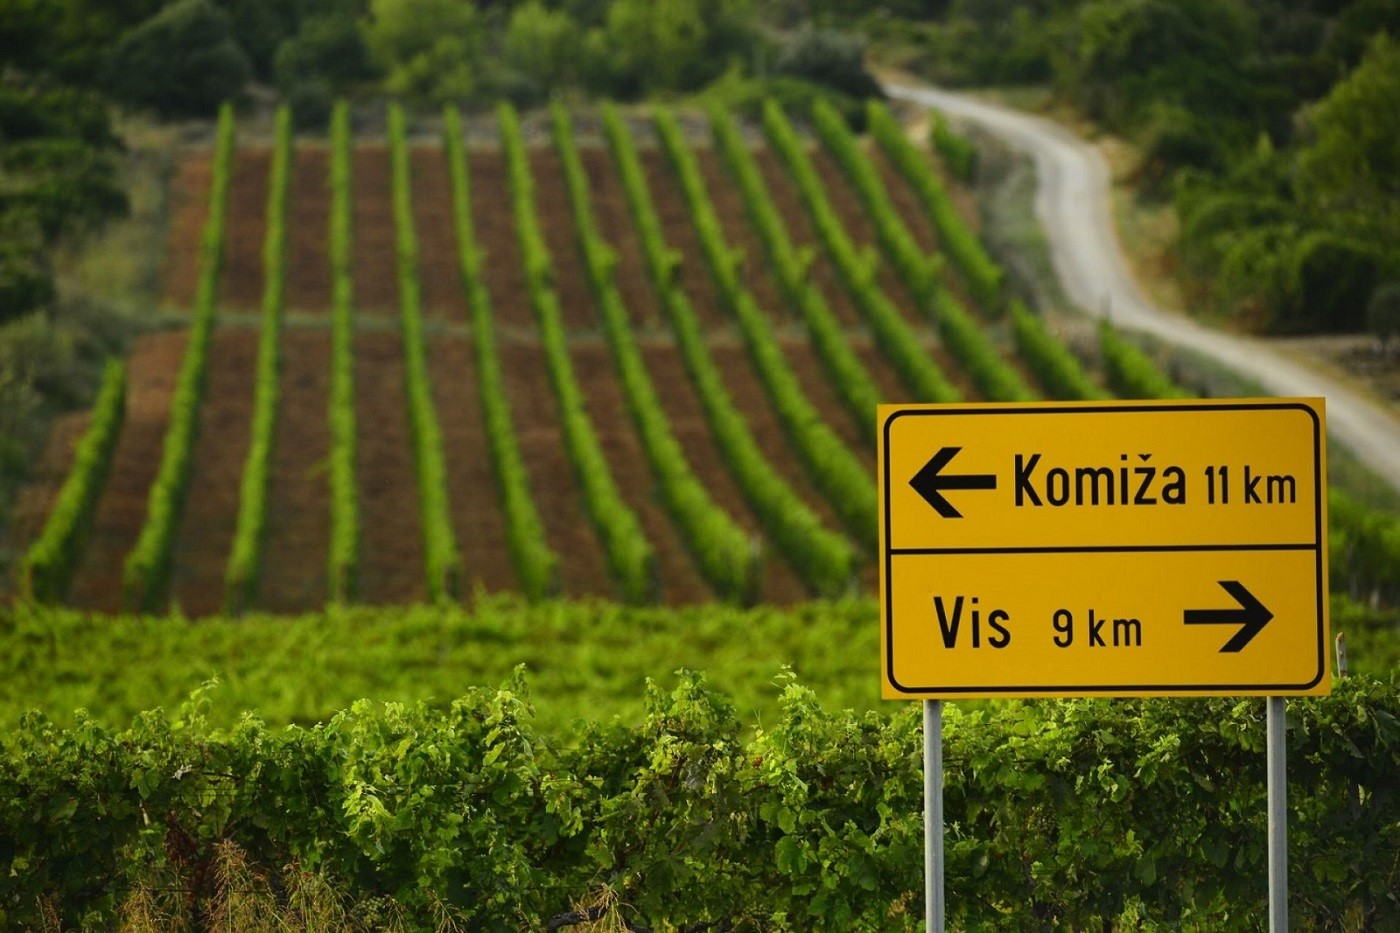 croatian wine region vis